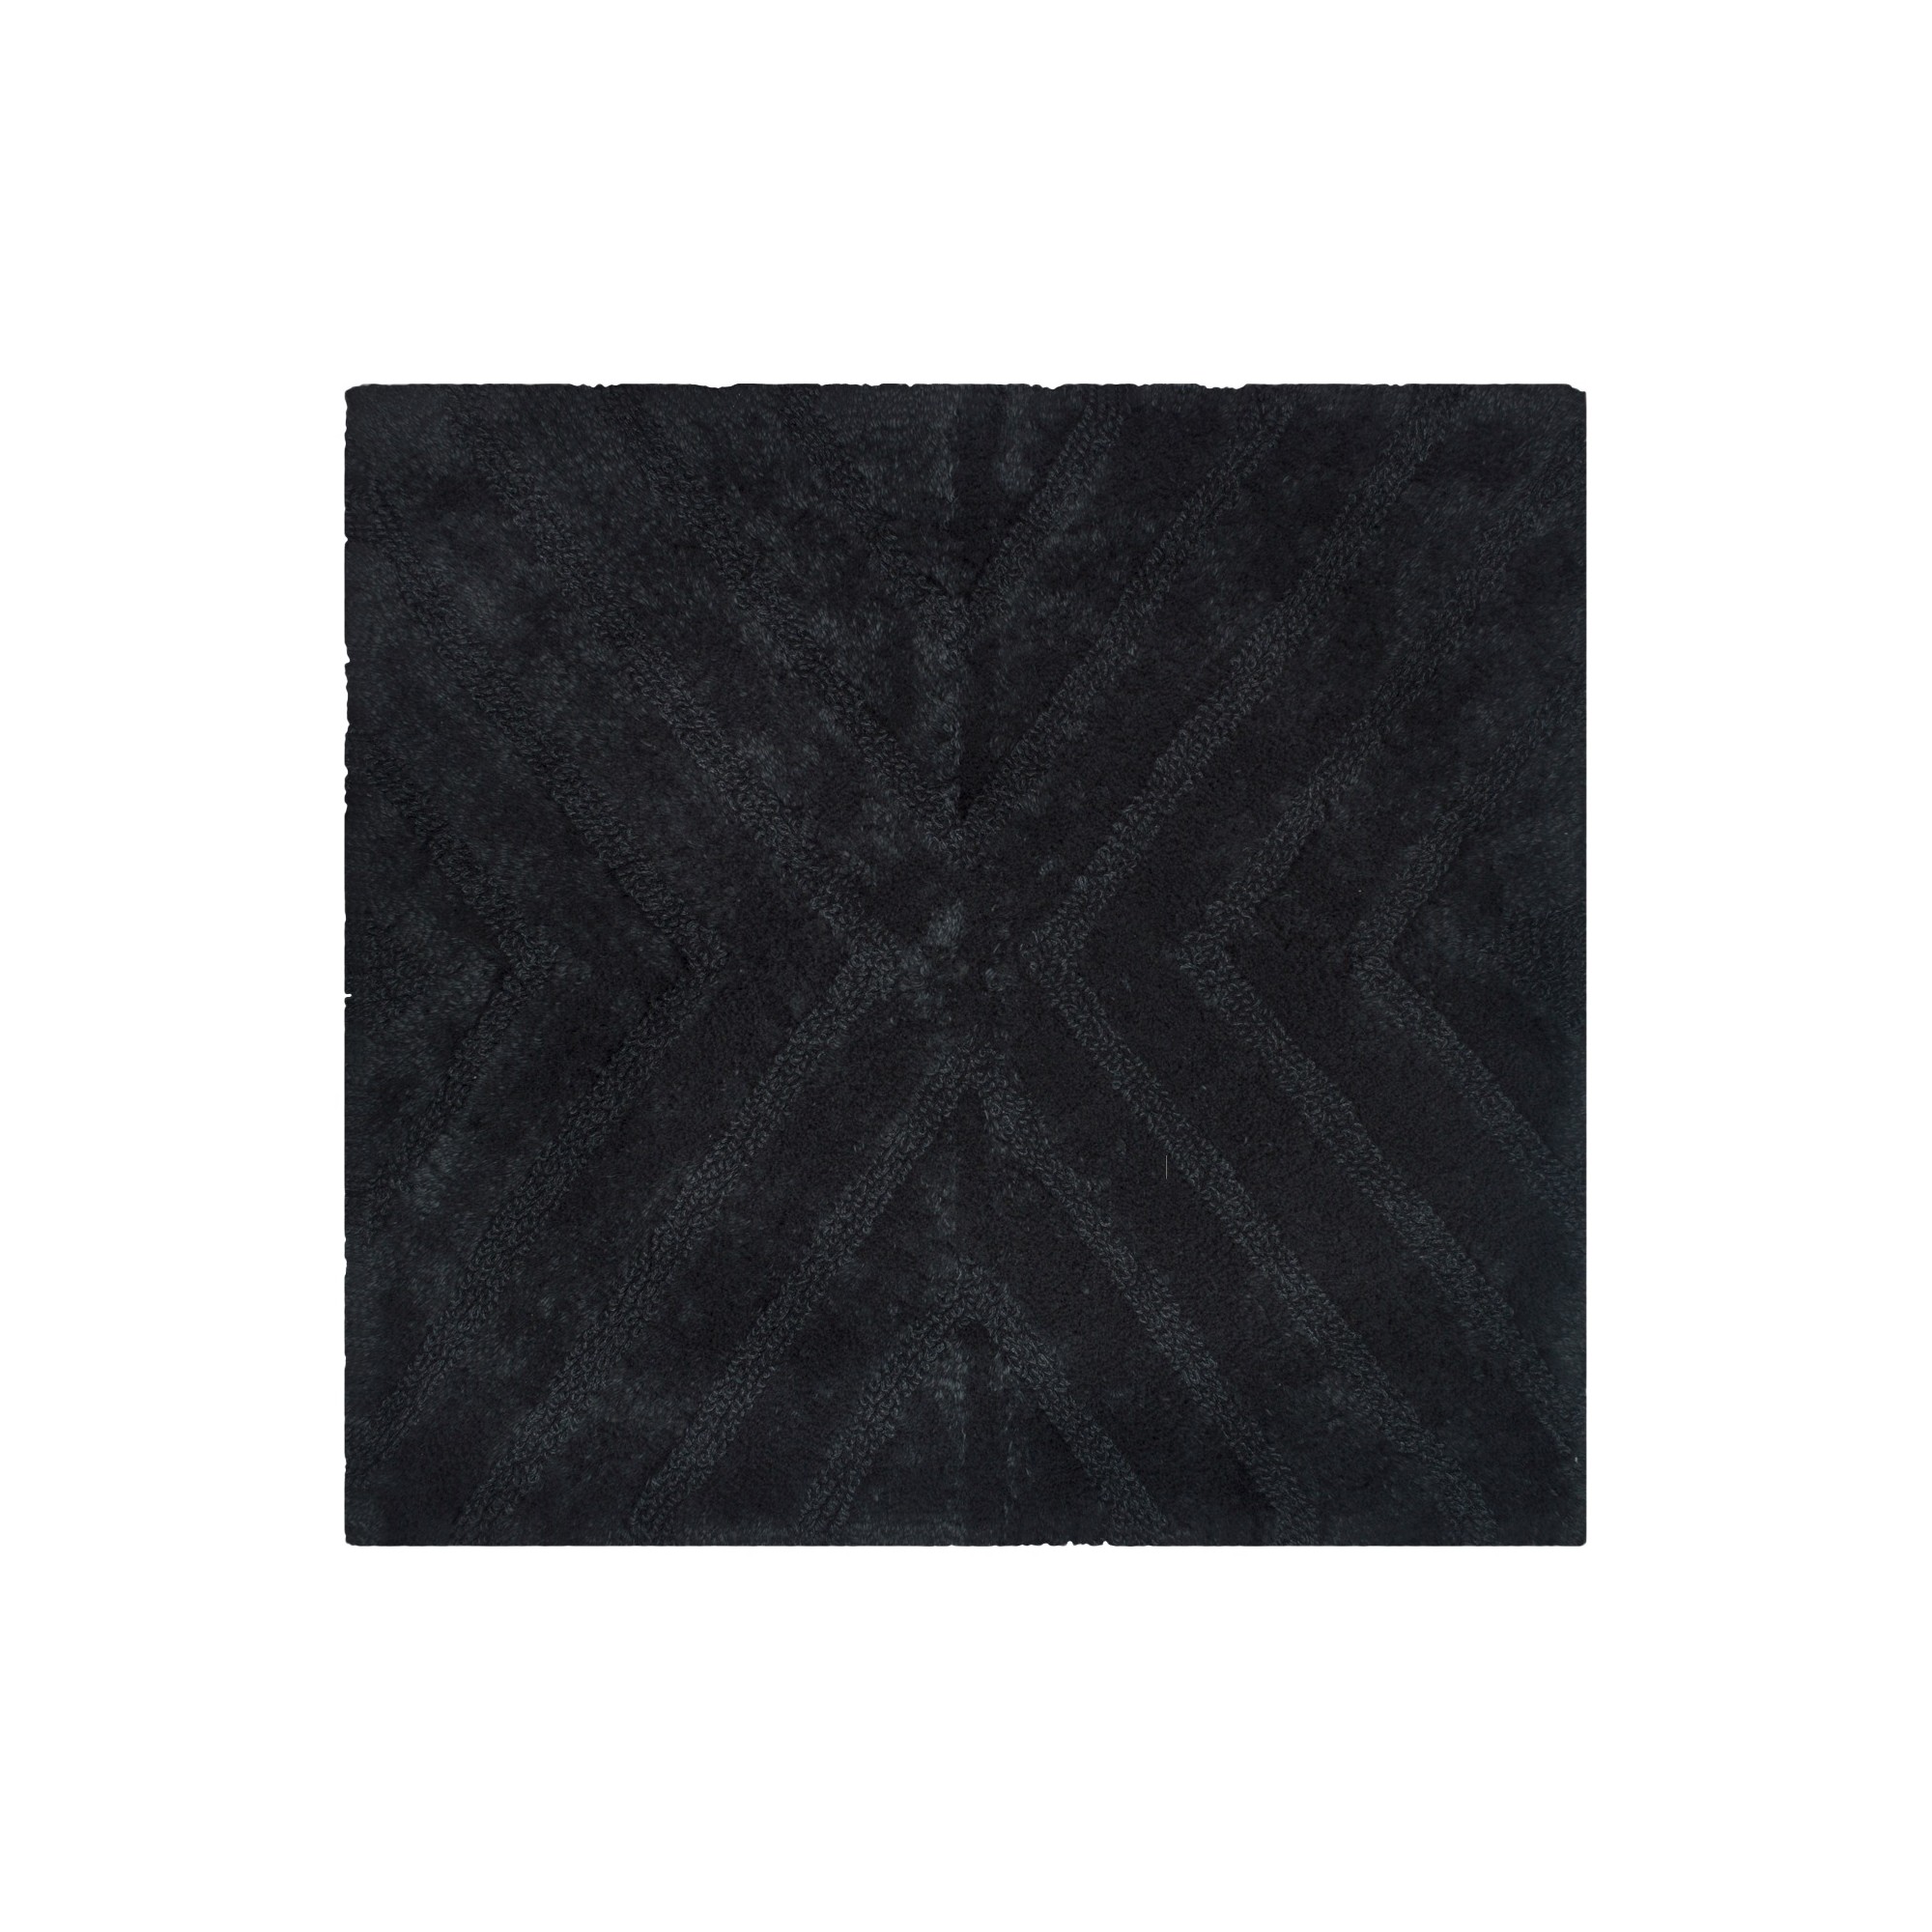 Textured Stripe Square Bath Rug Galaxy Black - Project 62 + Nate Berkus, by  Project 62 + Nate Berkus